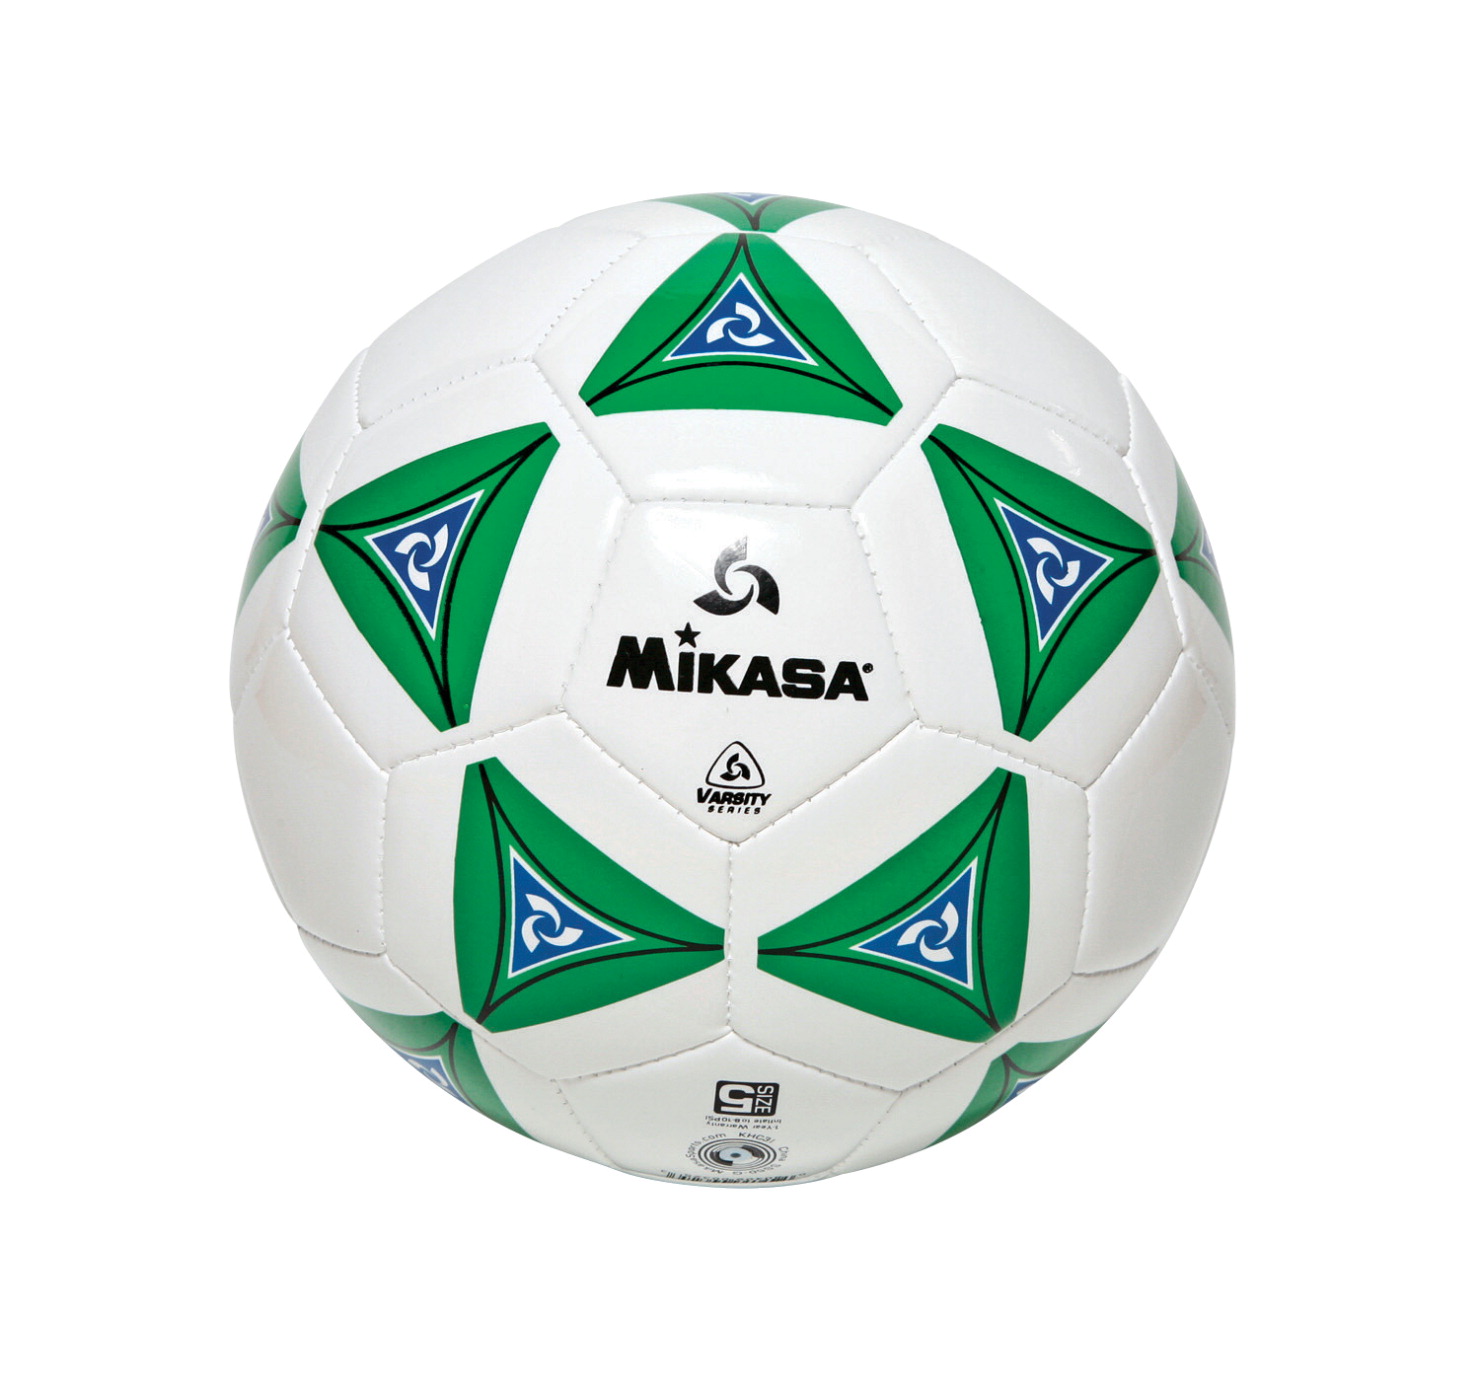 Mikasa Sports Usa Mikasa Deluxe Soccer Football Futbol Ball Size 3 White With Green New SS30-G